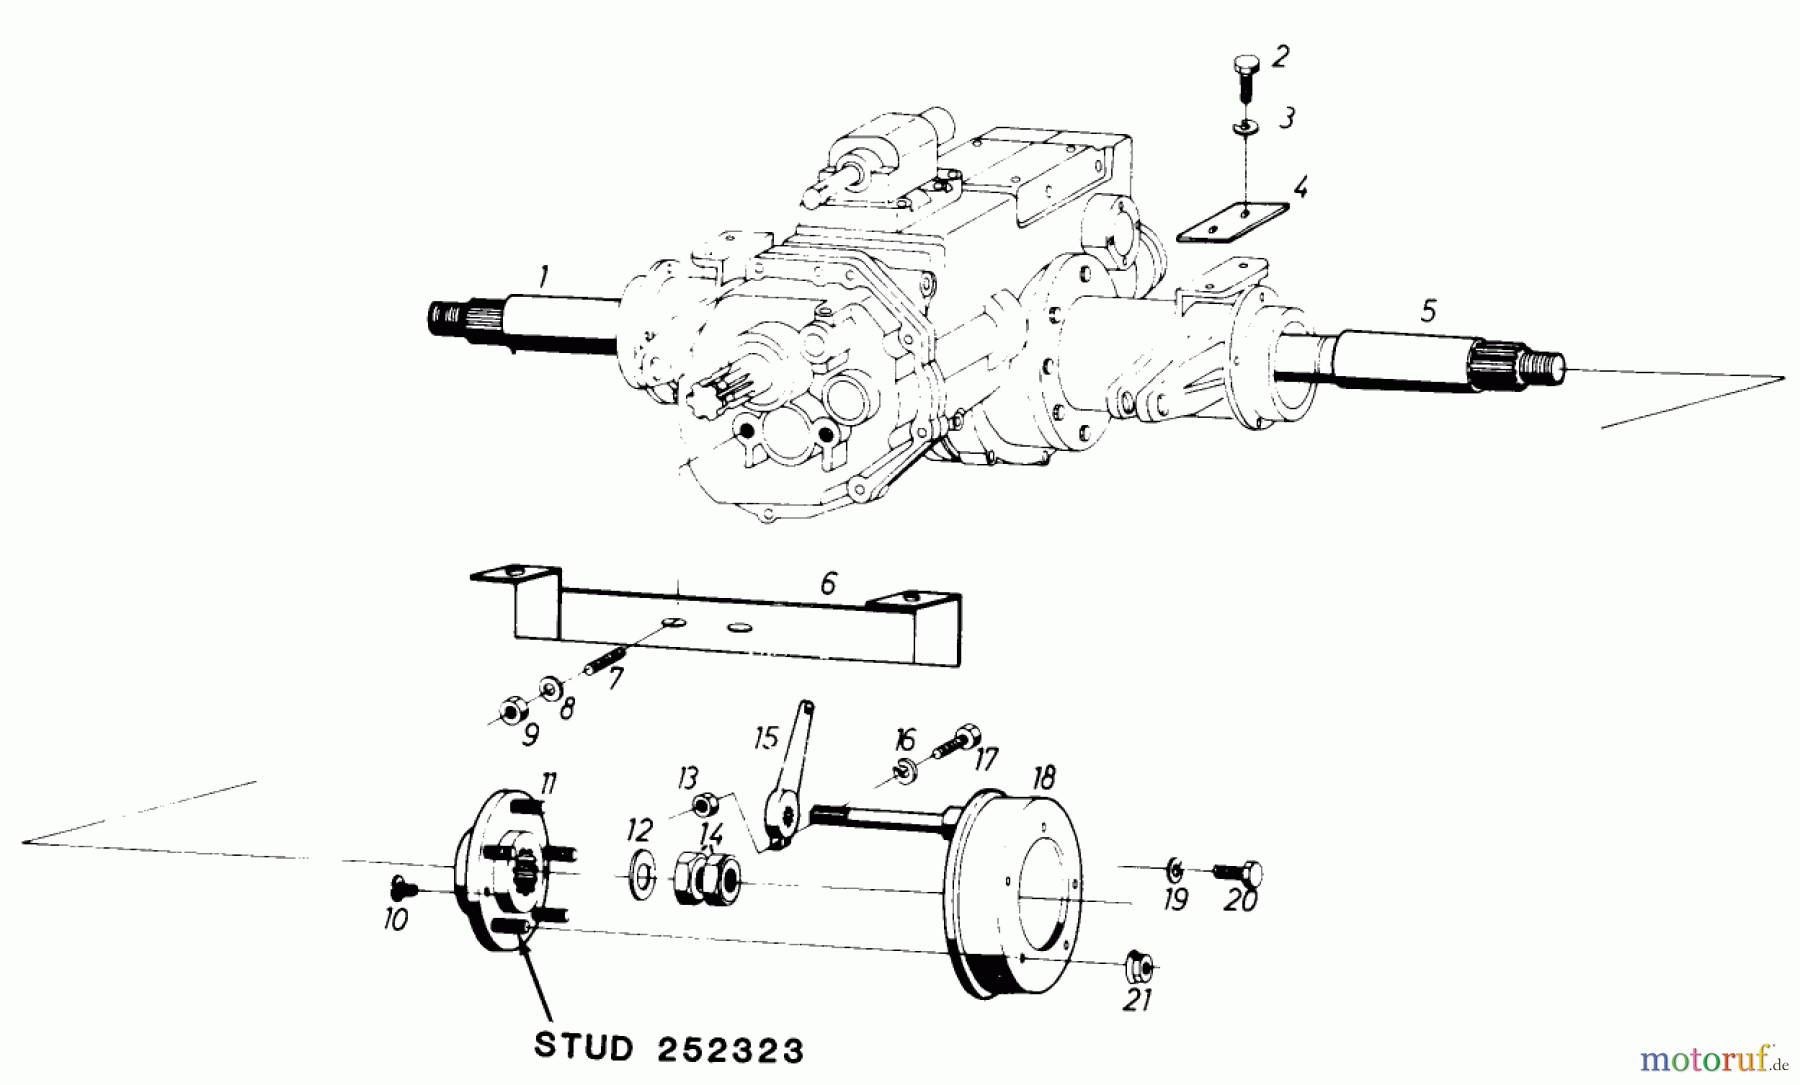  Toro Neu Mowers, Lawn & Garden Tractor Seite 1 61-20RG01 (D-250) - Toro D-250 10-Speed Tractor, 1976 BRAKES